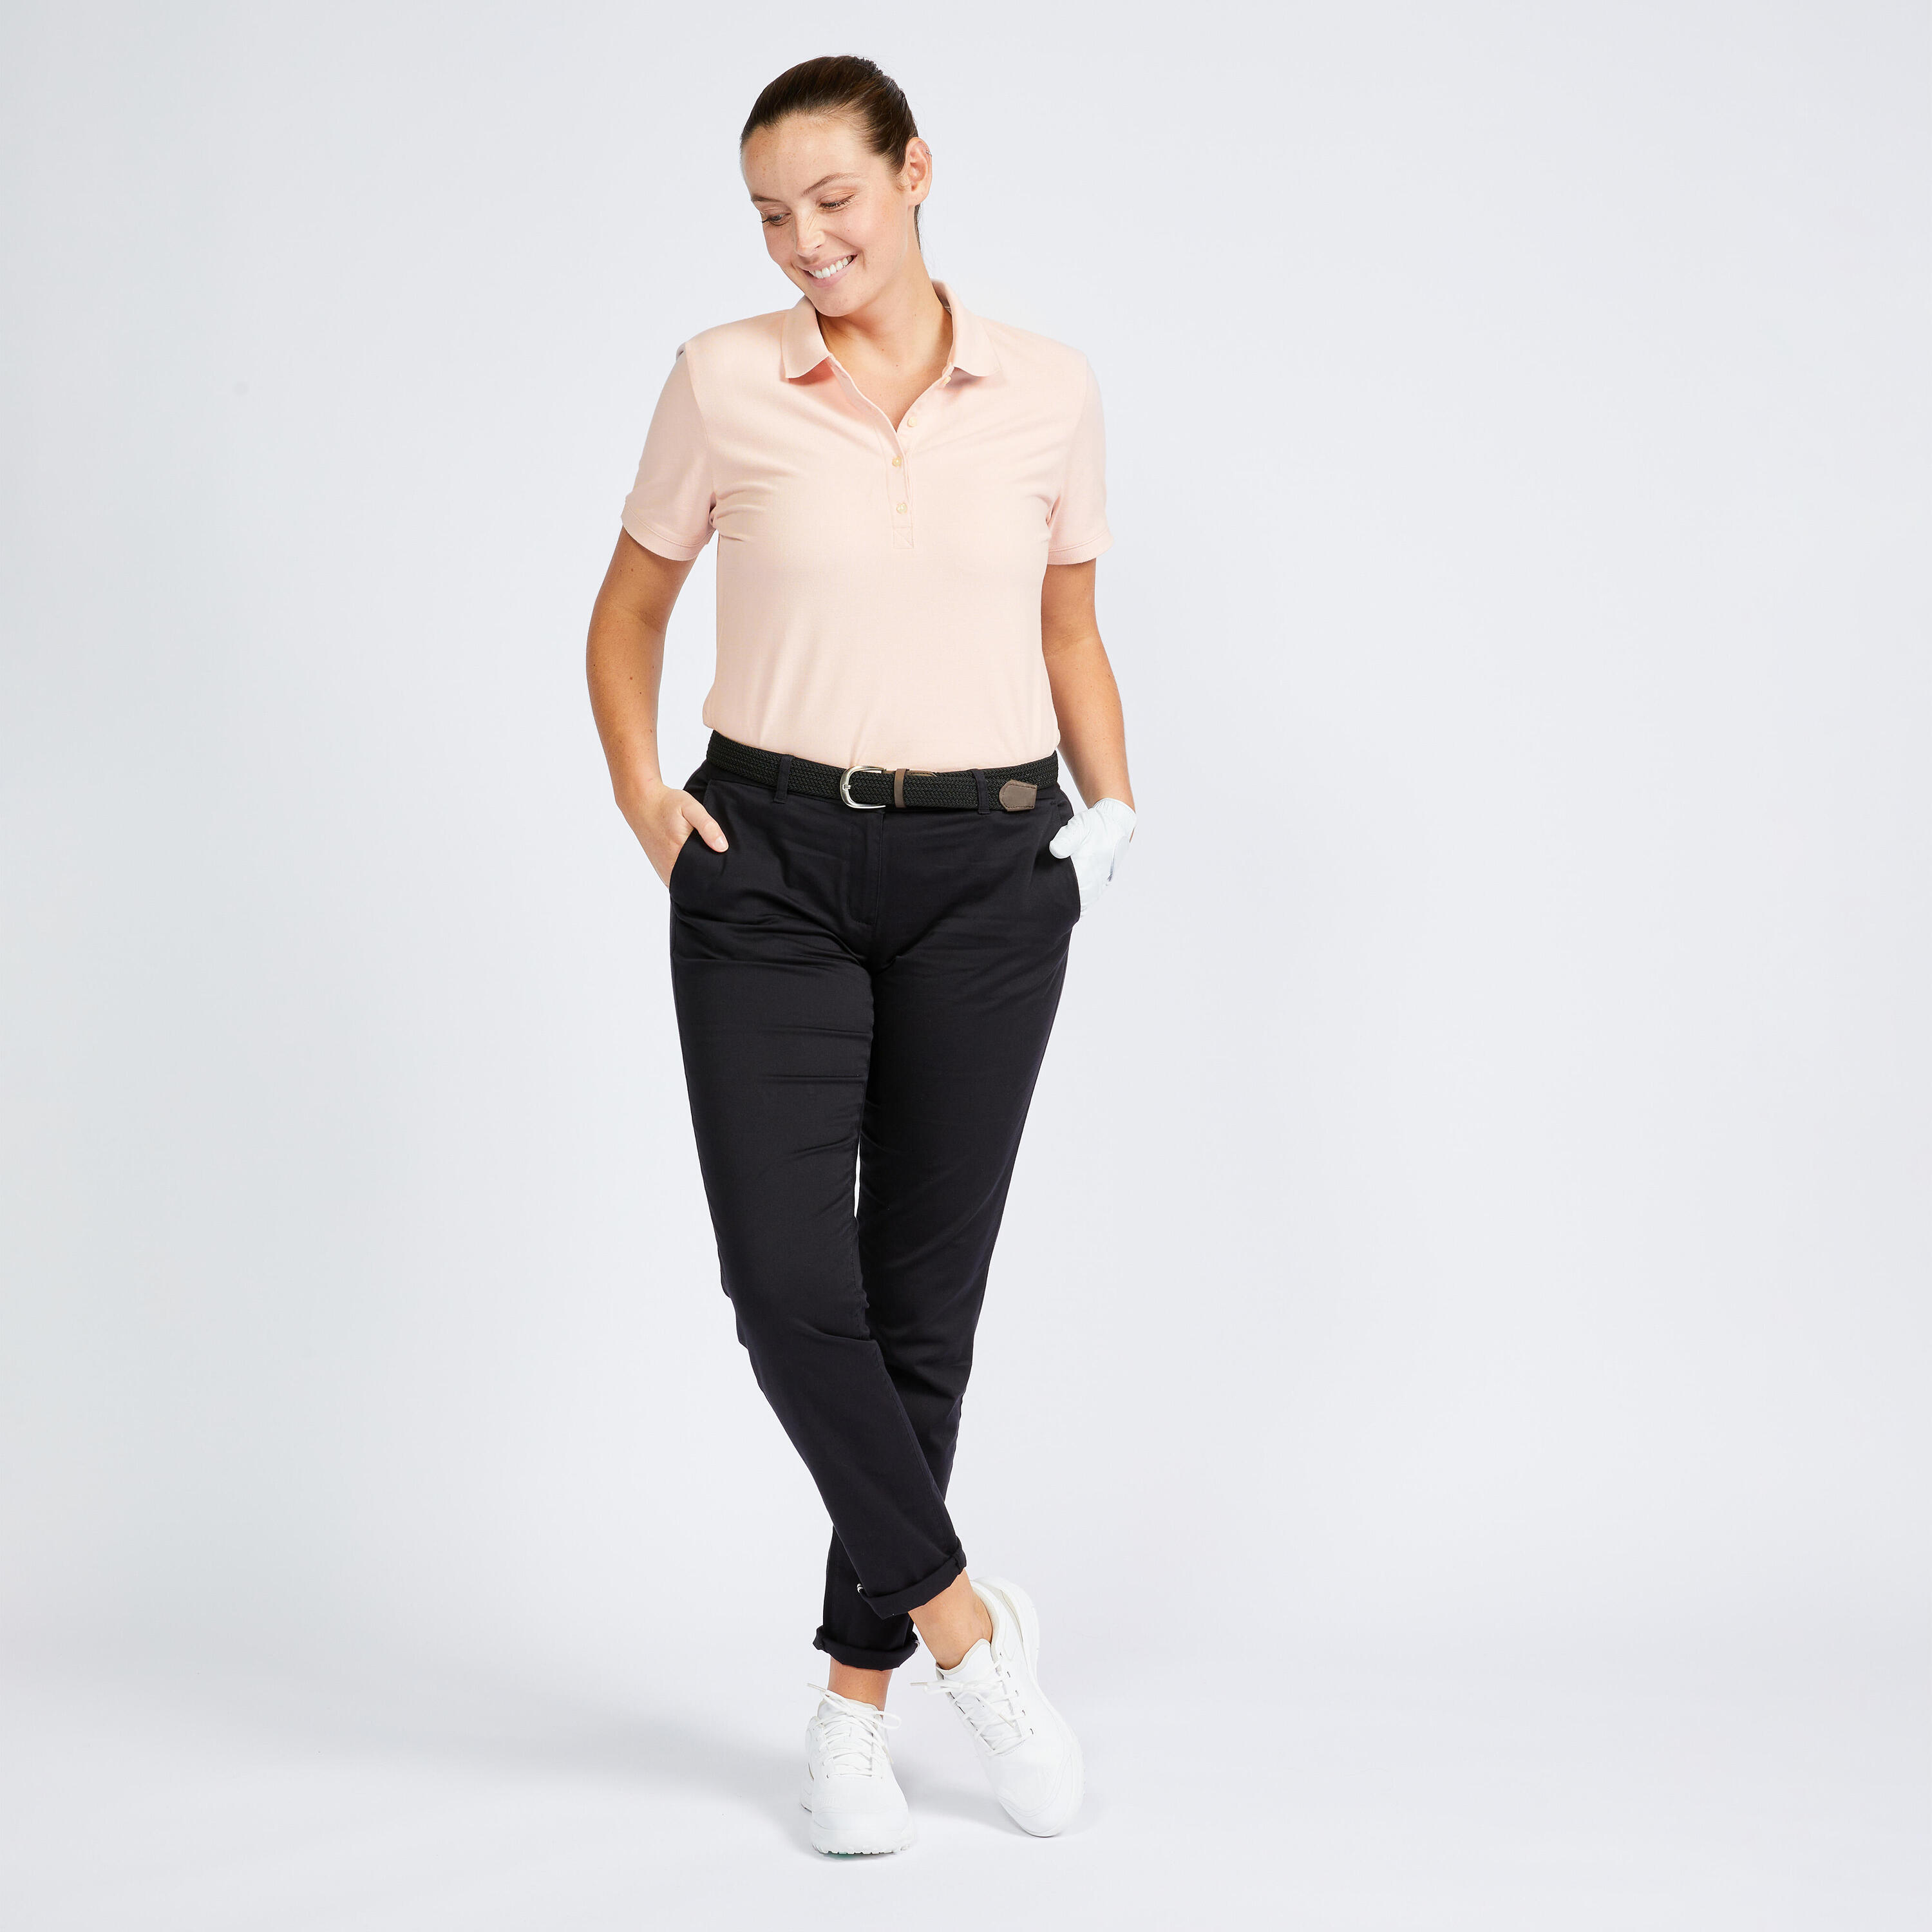 Women's golf short-sleeved polo shirt - MW500 pale pink 2/6